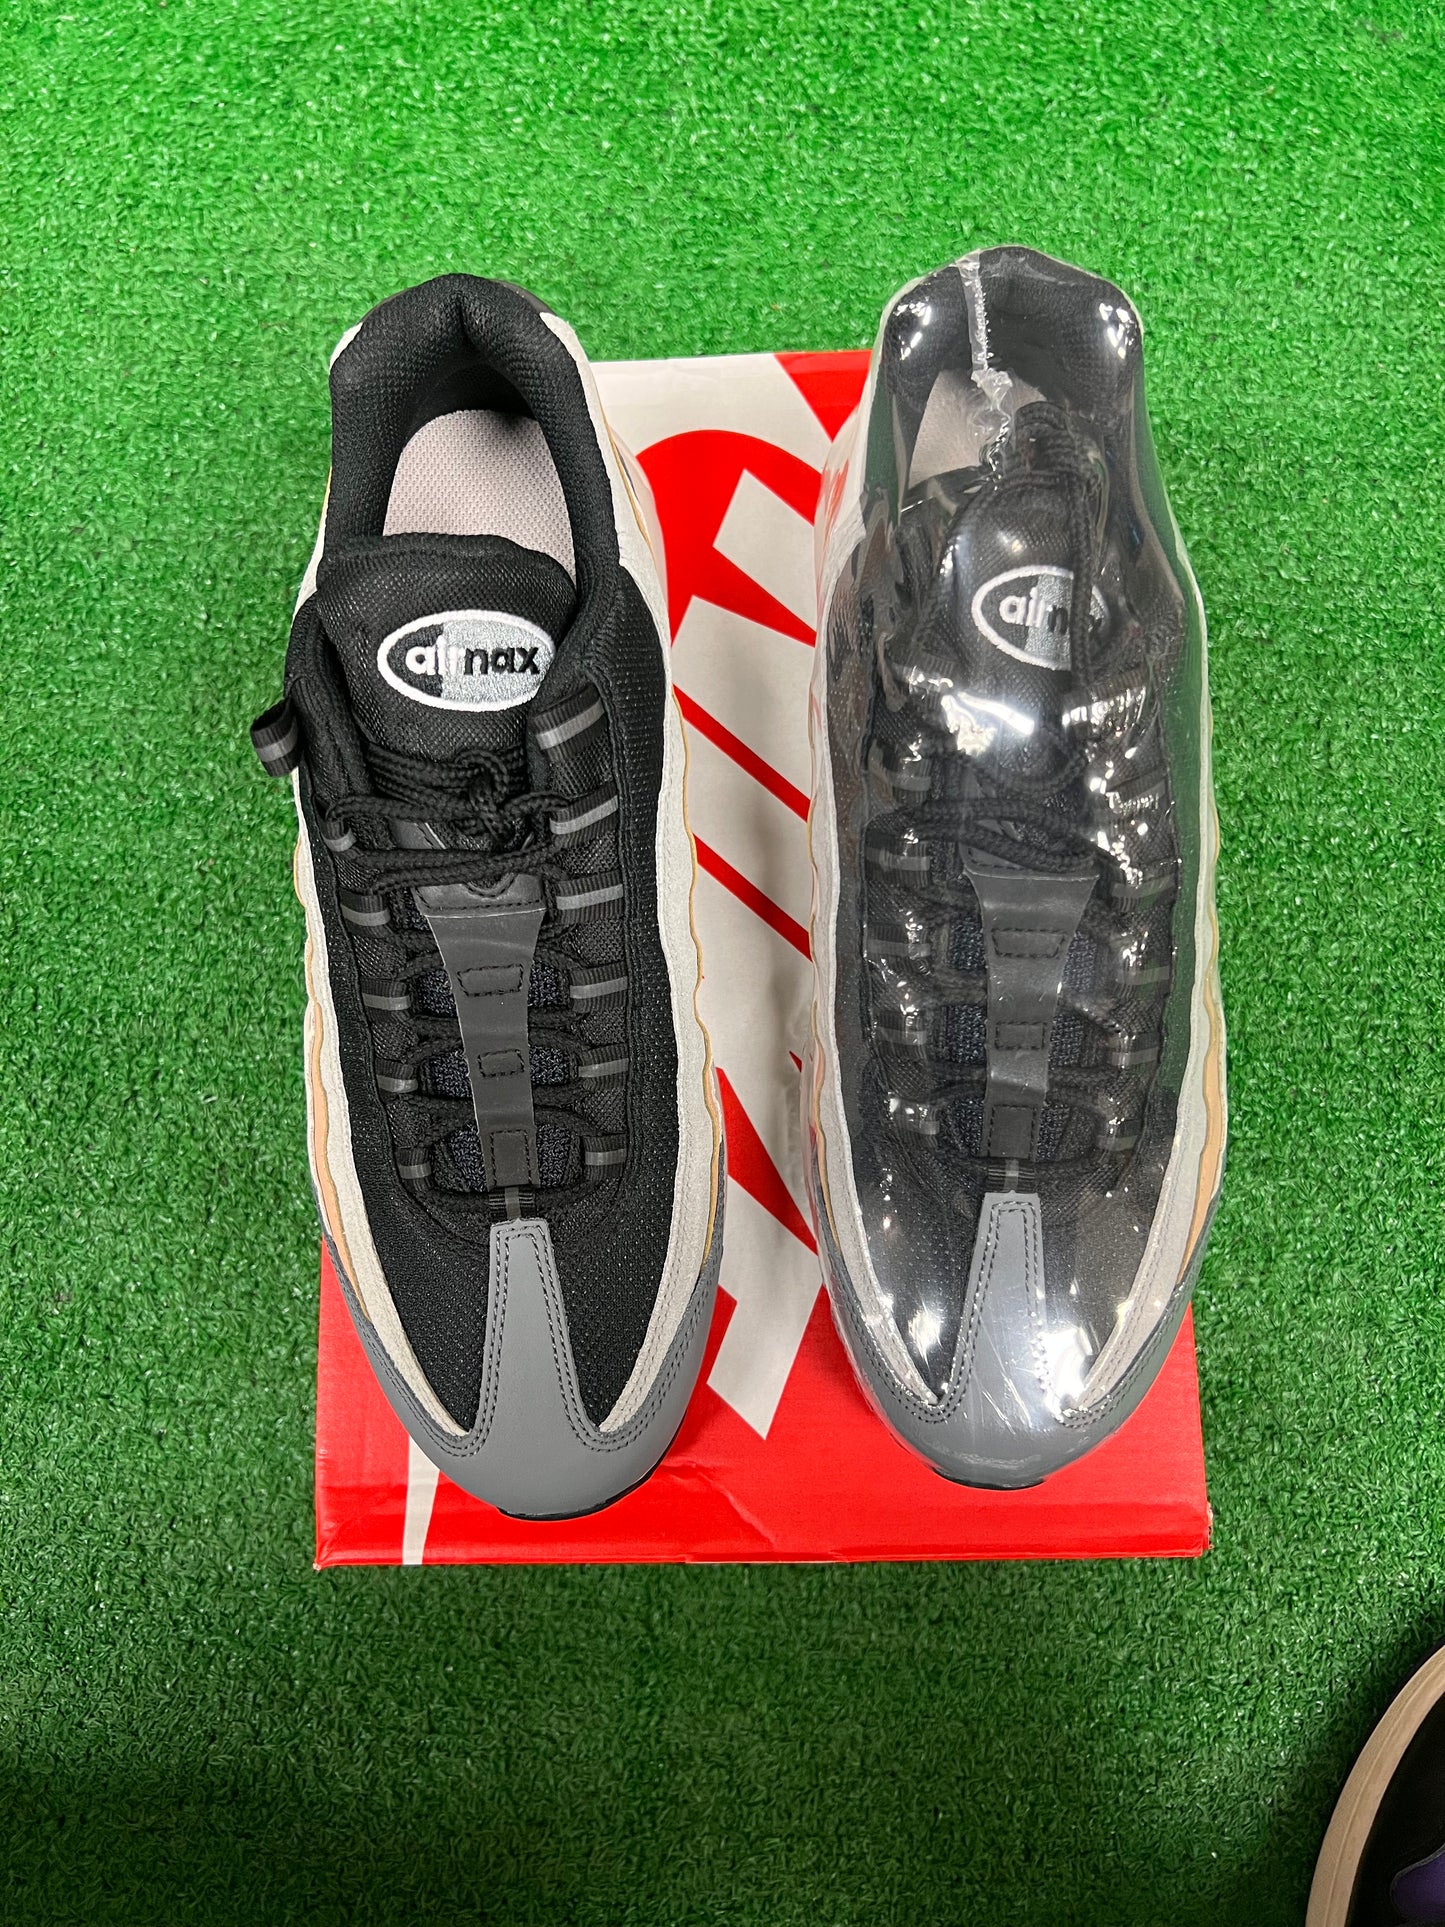 Men’s Nike Air Max 95 Black Beige Grey size 8